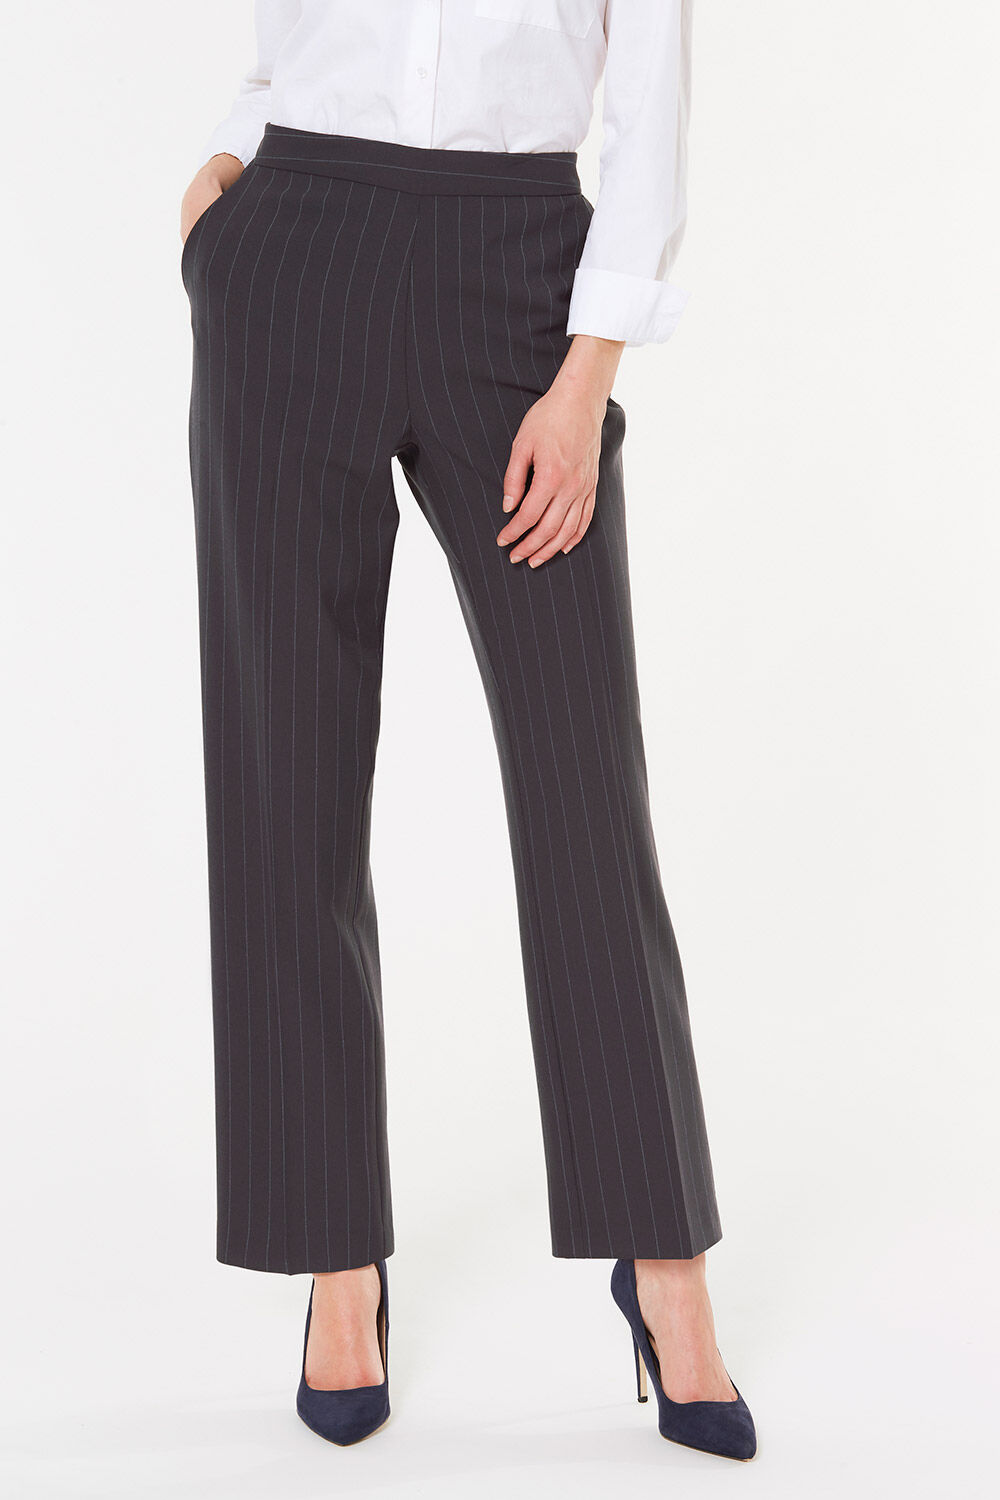 Bonmarche Workwear Straight Leg Stripe Pull On Trouser - Navy, Size: 10